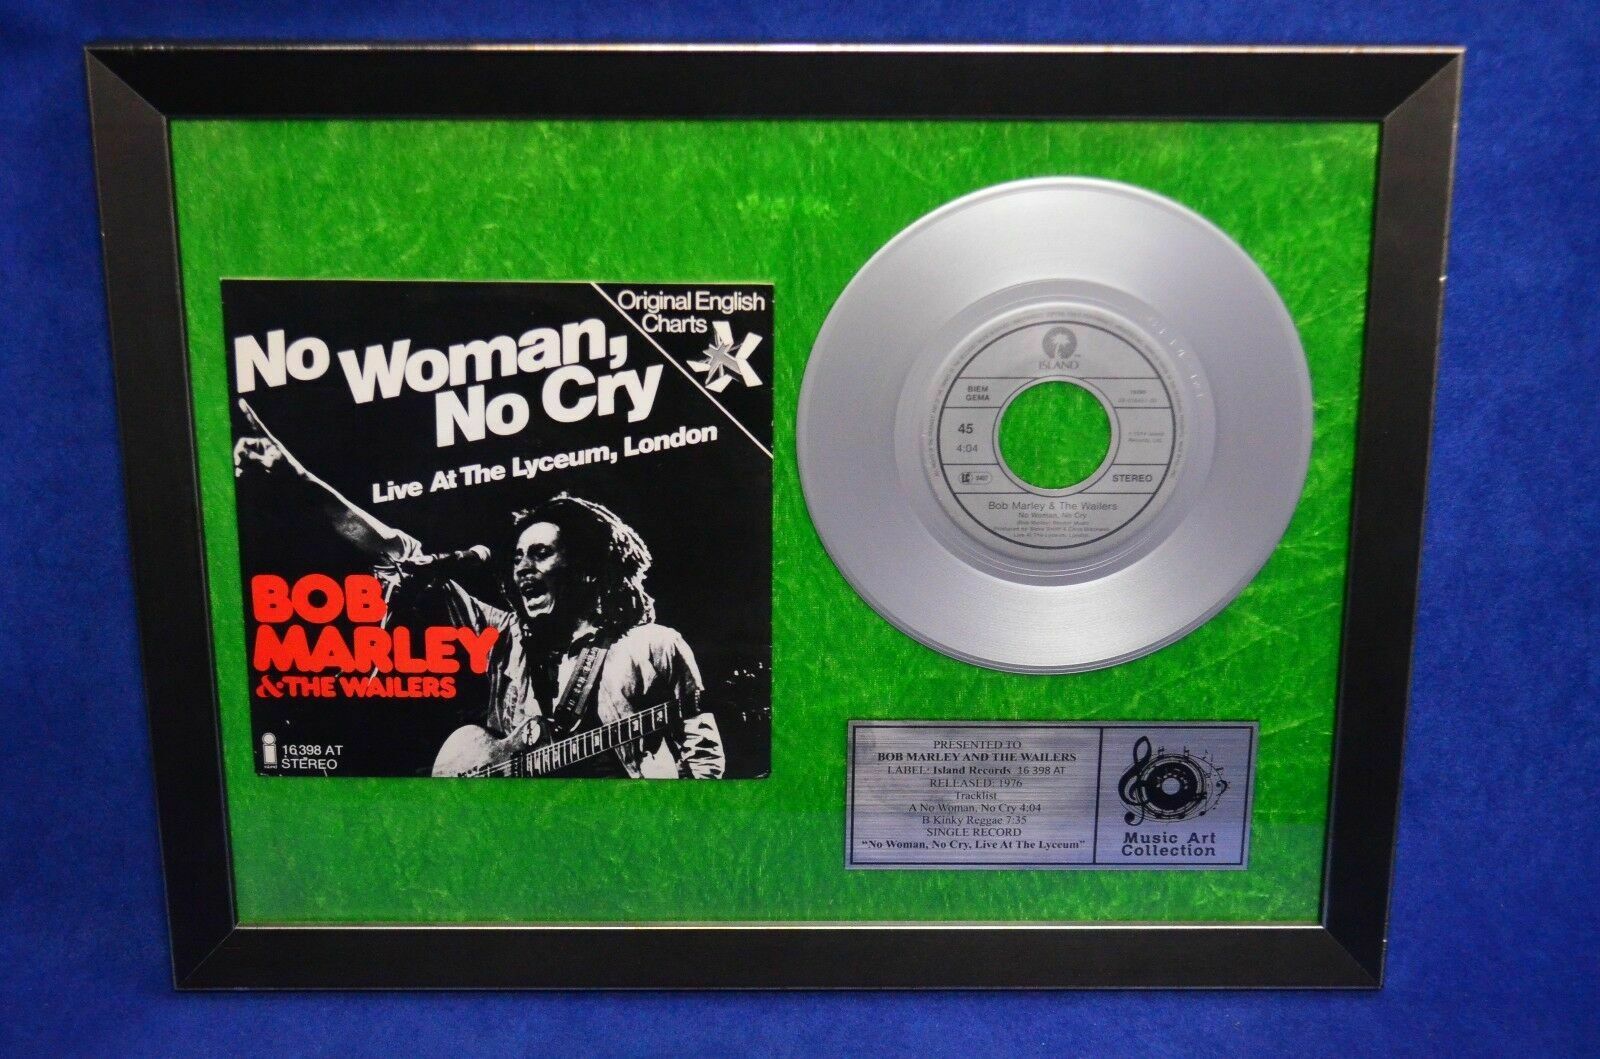 BOB MARLEY - No Woman No Cry  bild single 7" records PICTURE Silber silver